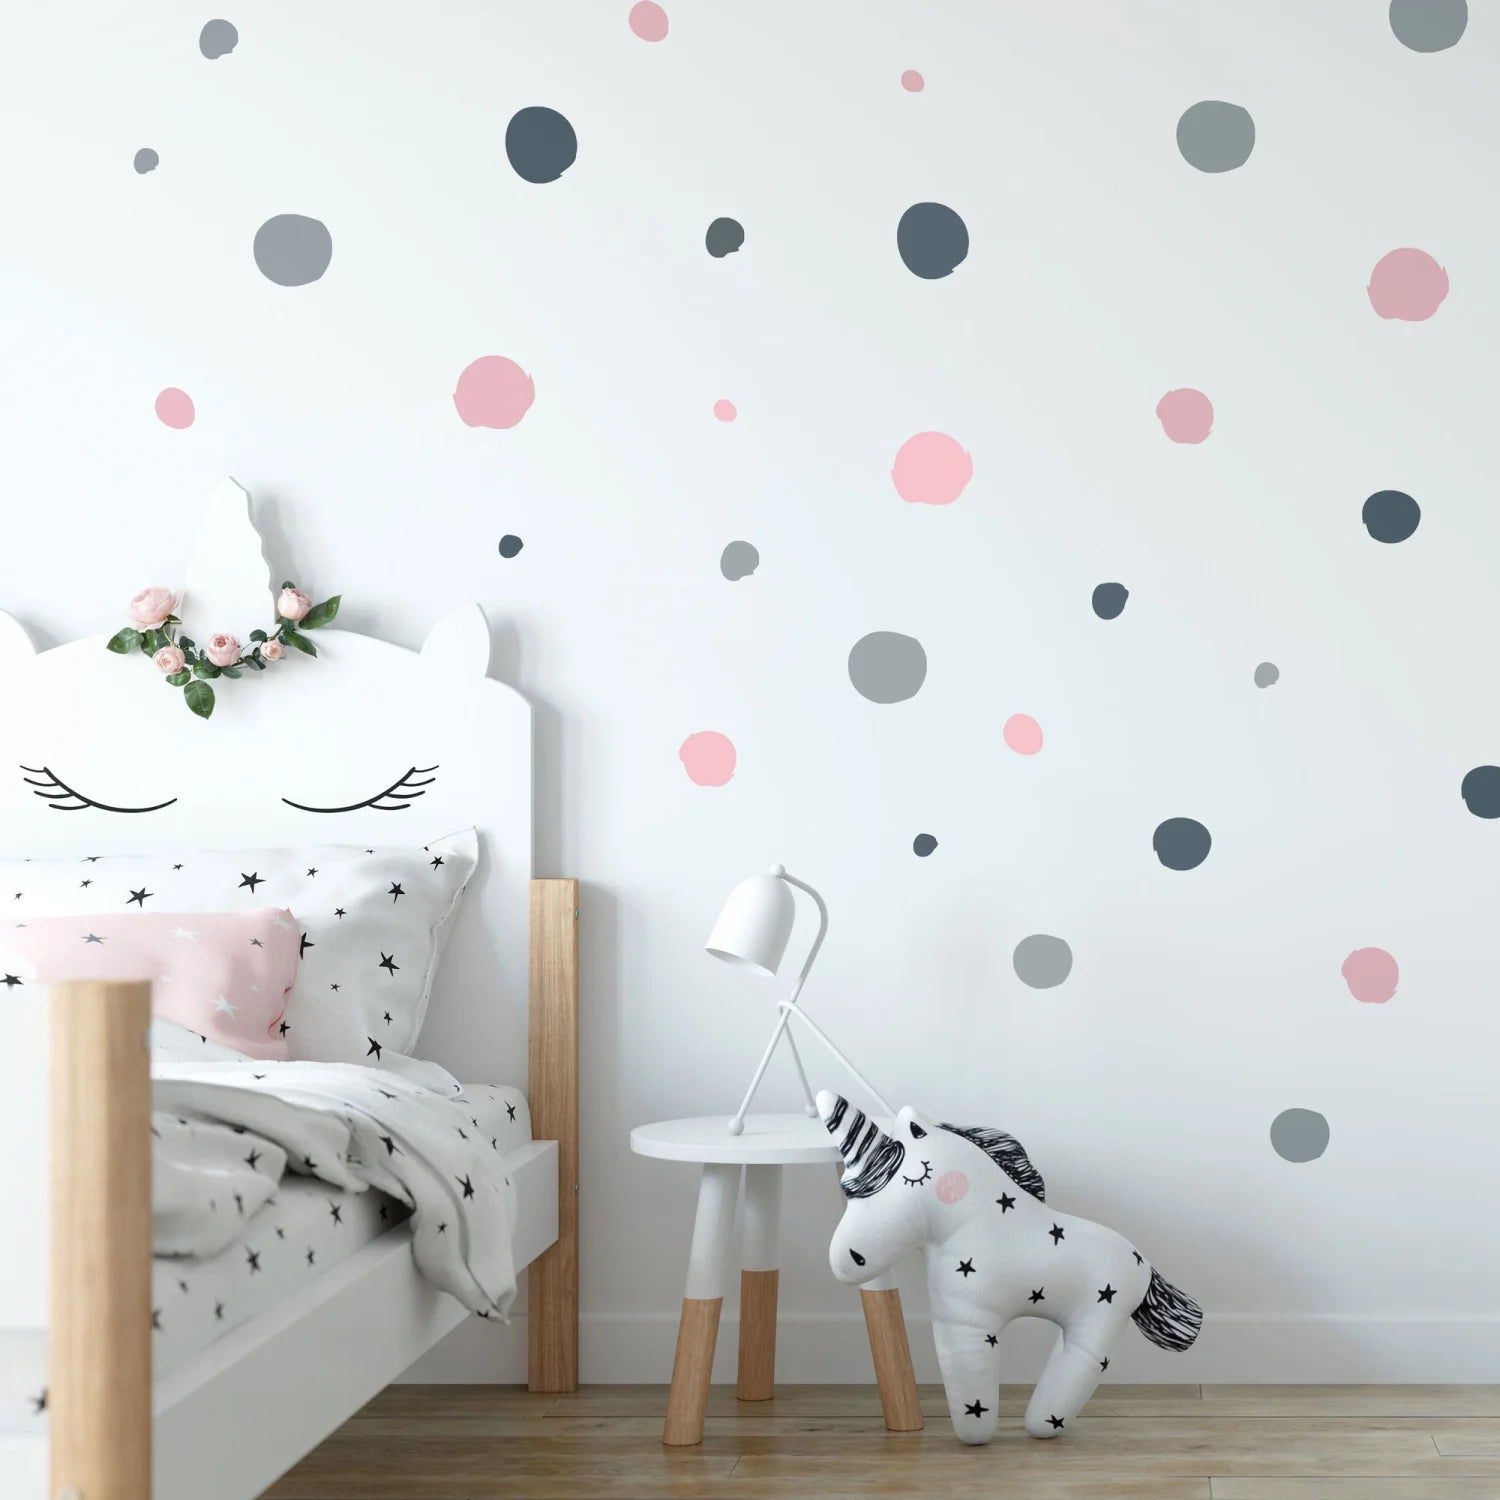 Pink & Grey Polka Dot Wall Decal - Decals Dots